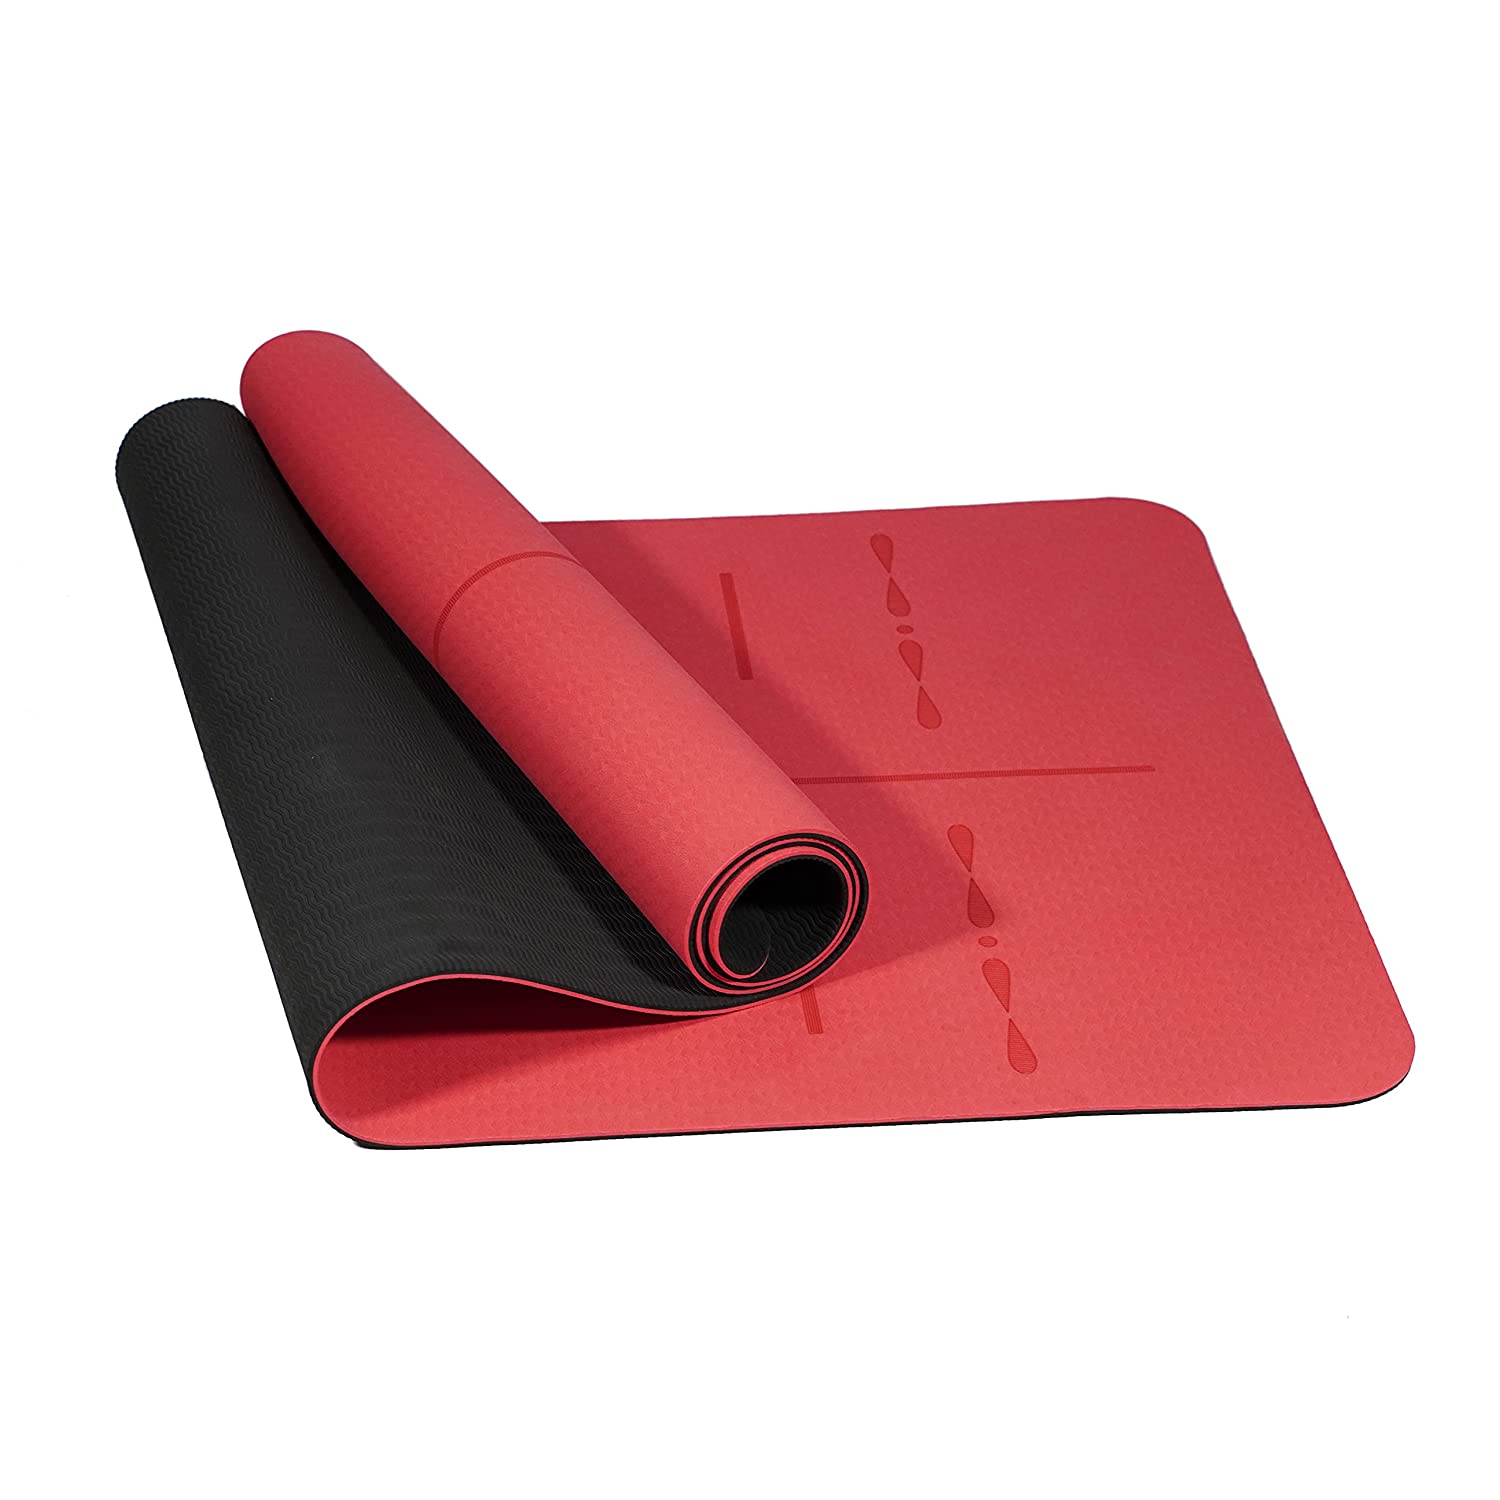 SOLARA Premium Yoga Mat for Men and Women